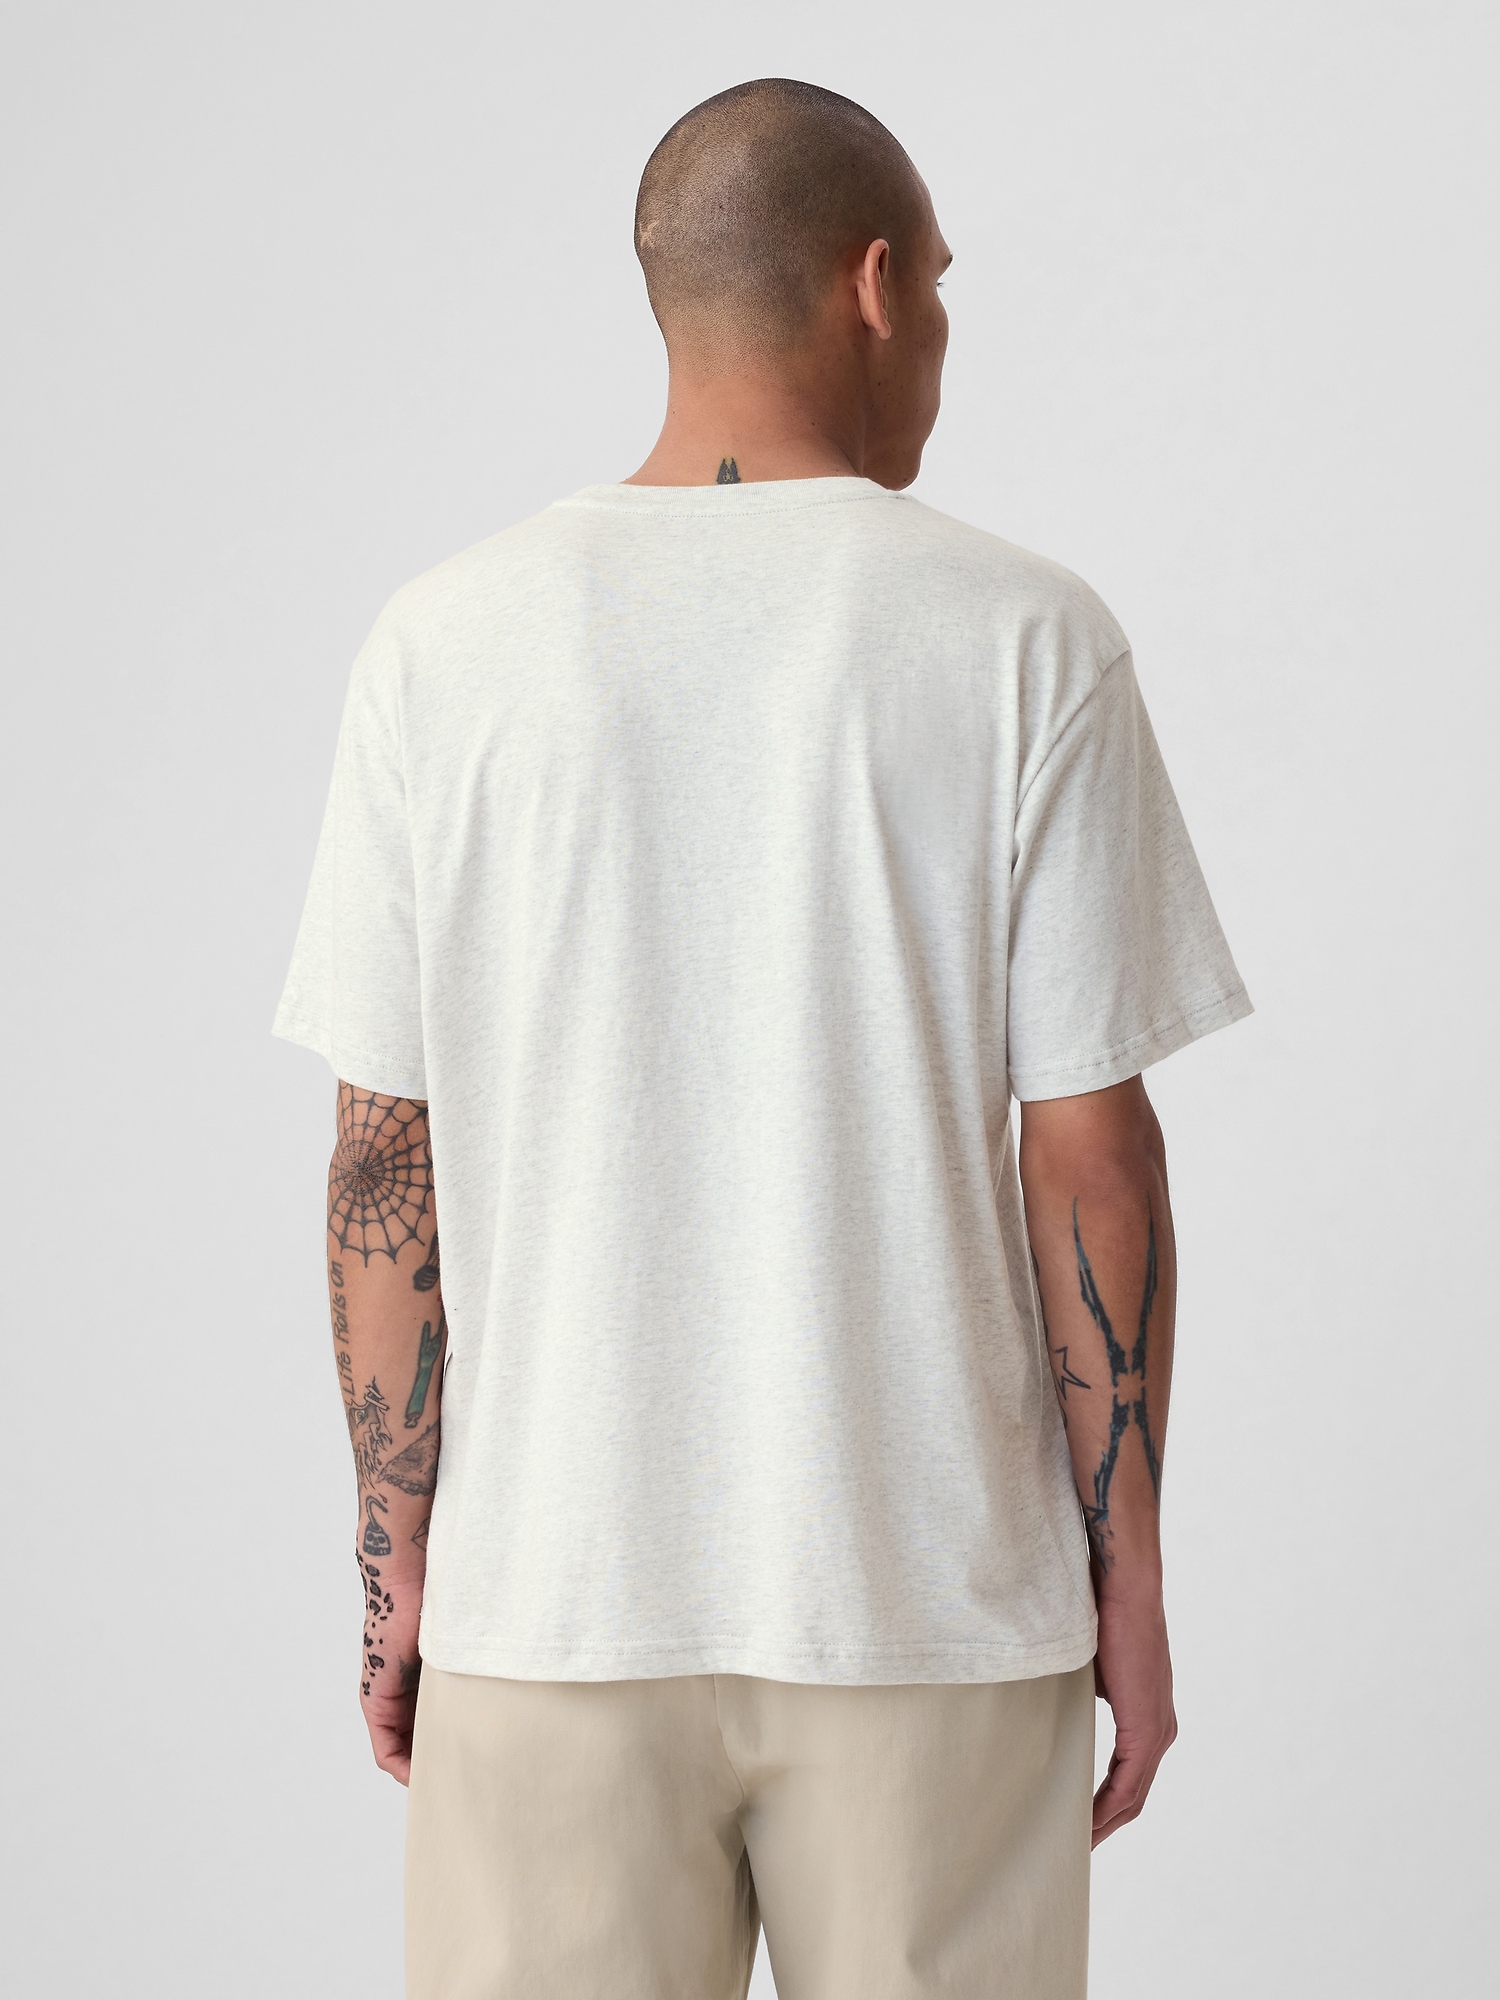 T-shirt à imprimé &# Keith Haring